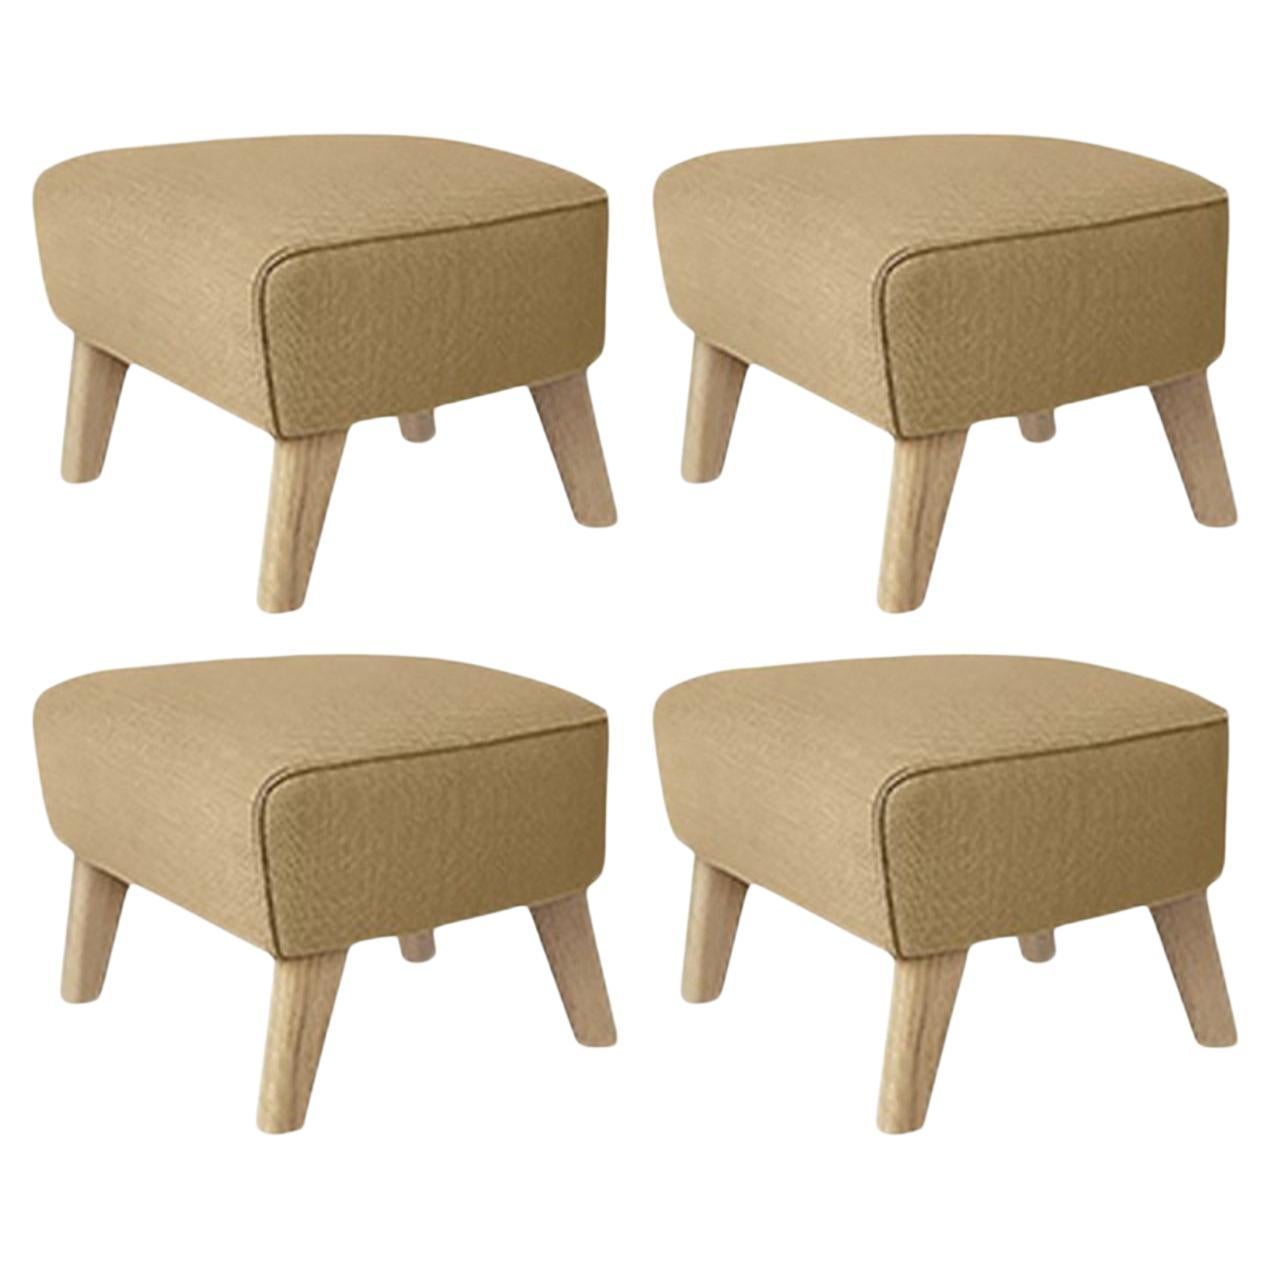 Set of 4 Sand, Natural Oak Raf Simons Vidar 3 My Own Chair Footstool by Lassen For Sale